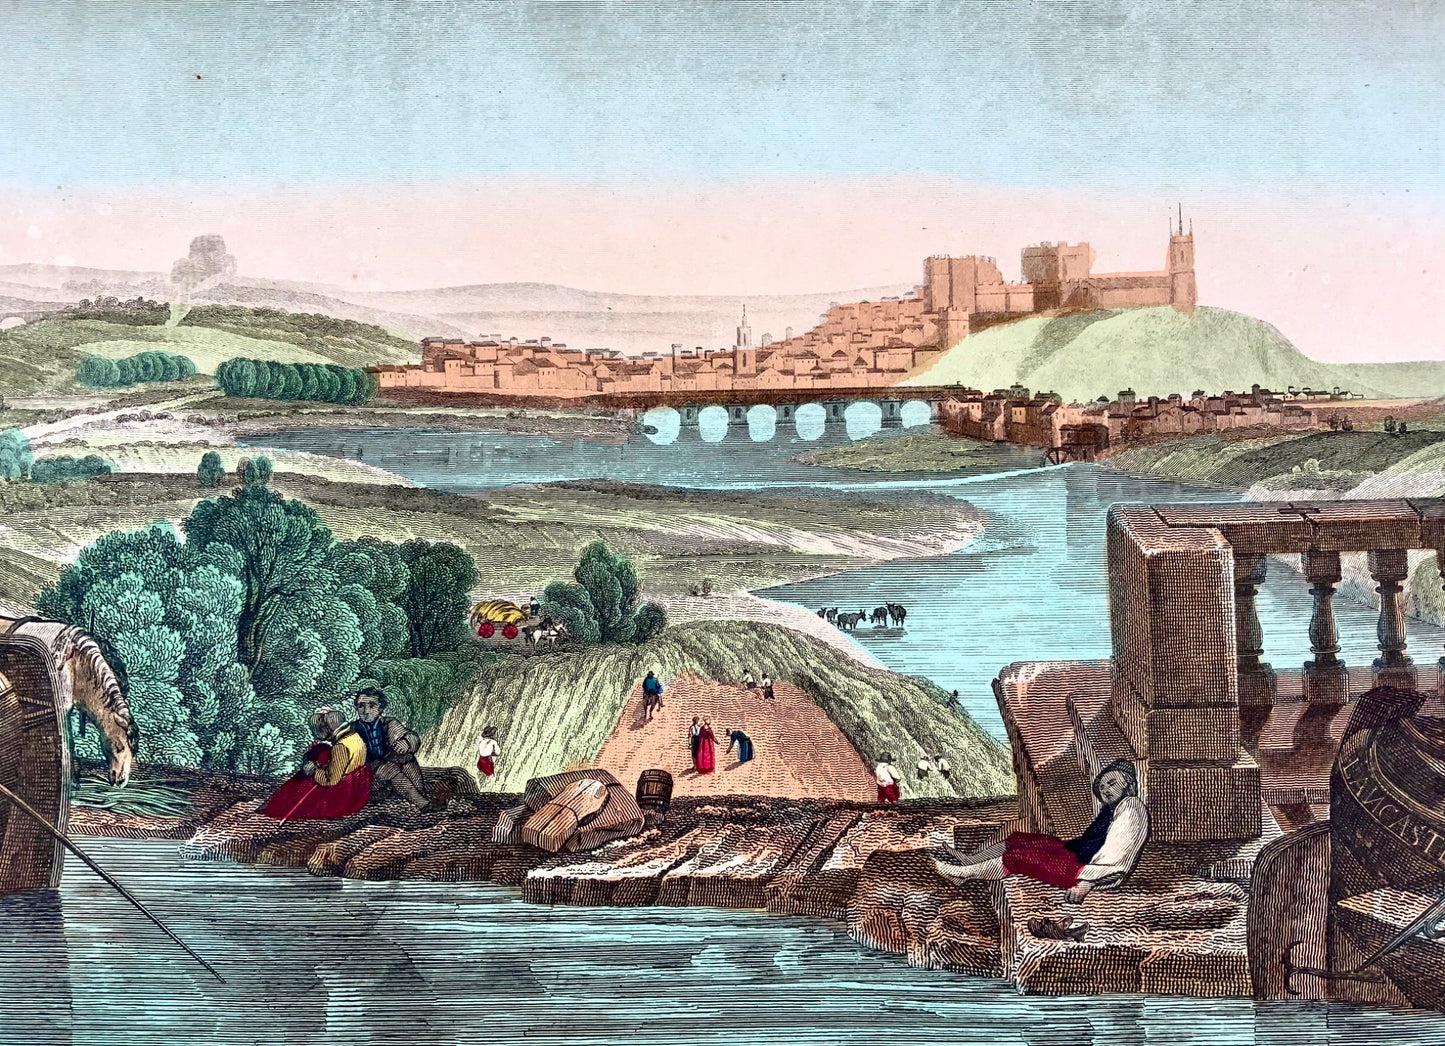 1825 Lancaster England, French Vue d’optique after JMW Turner, large folio, topography